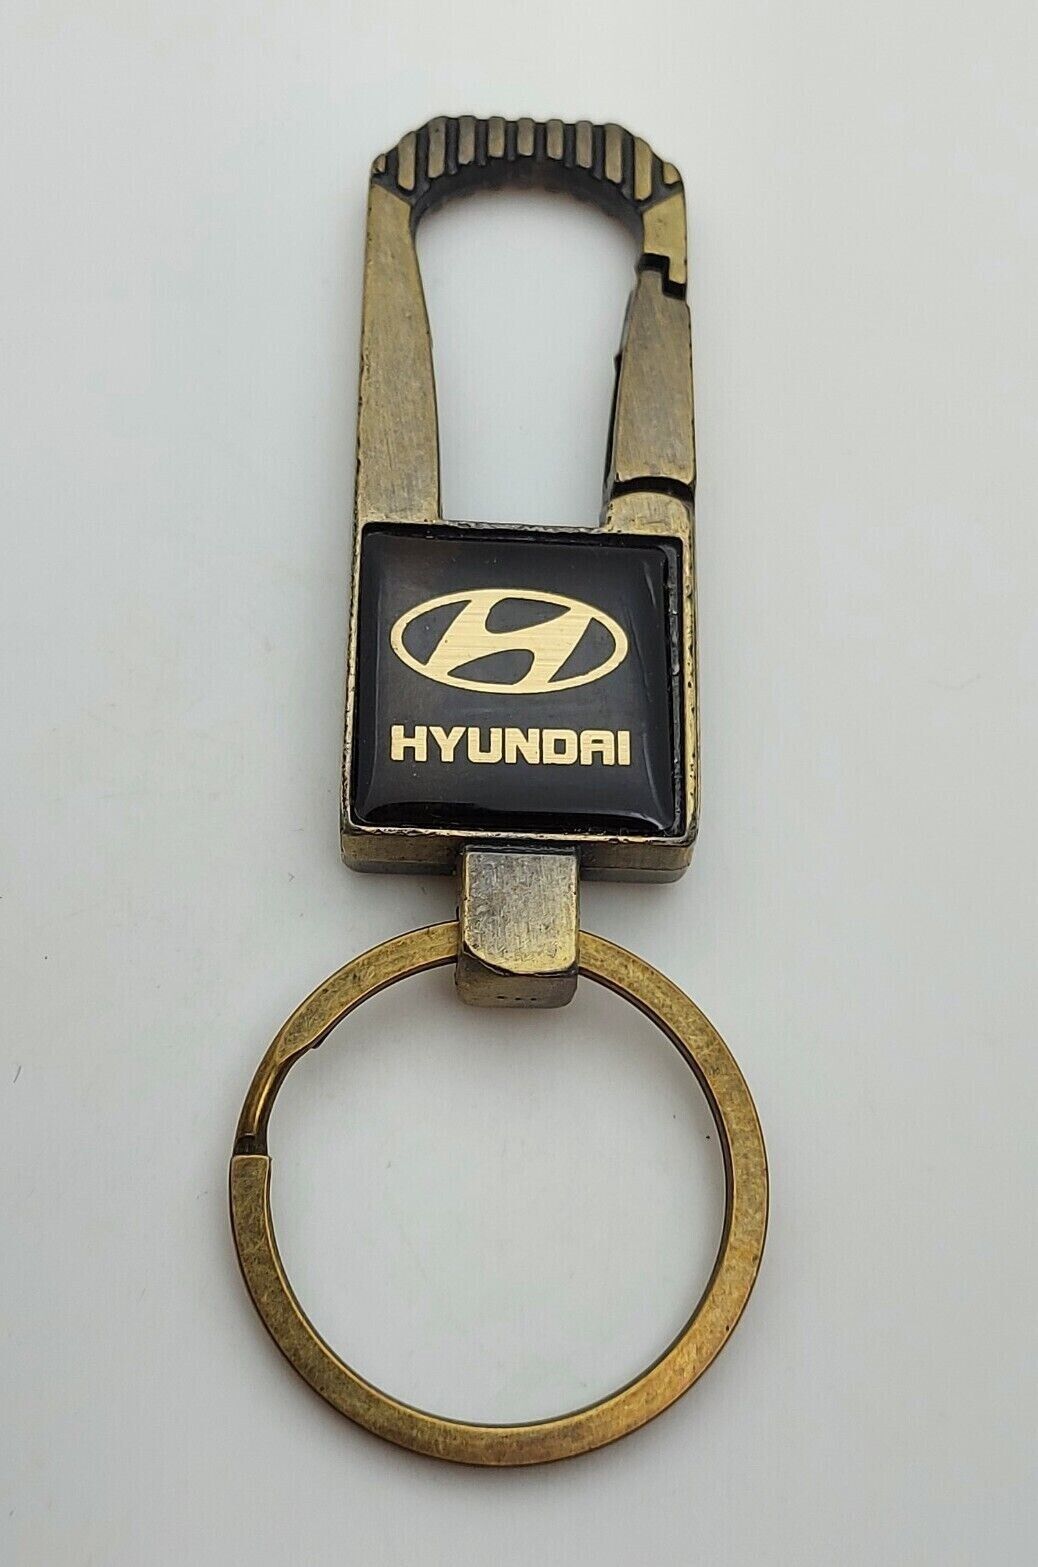 HYUNDAI South Korean auto company car, automotive, Keychains, Key Chain